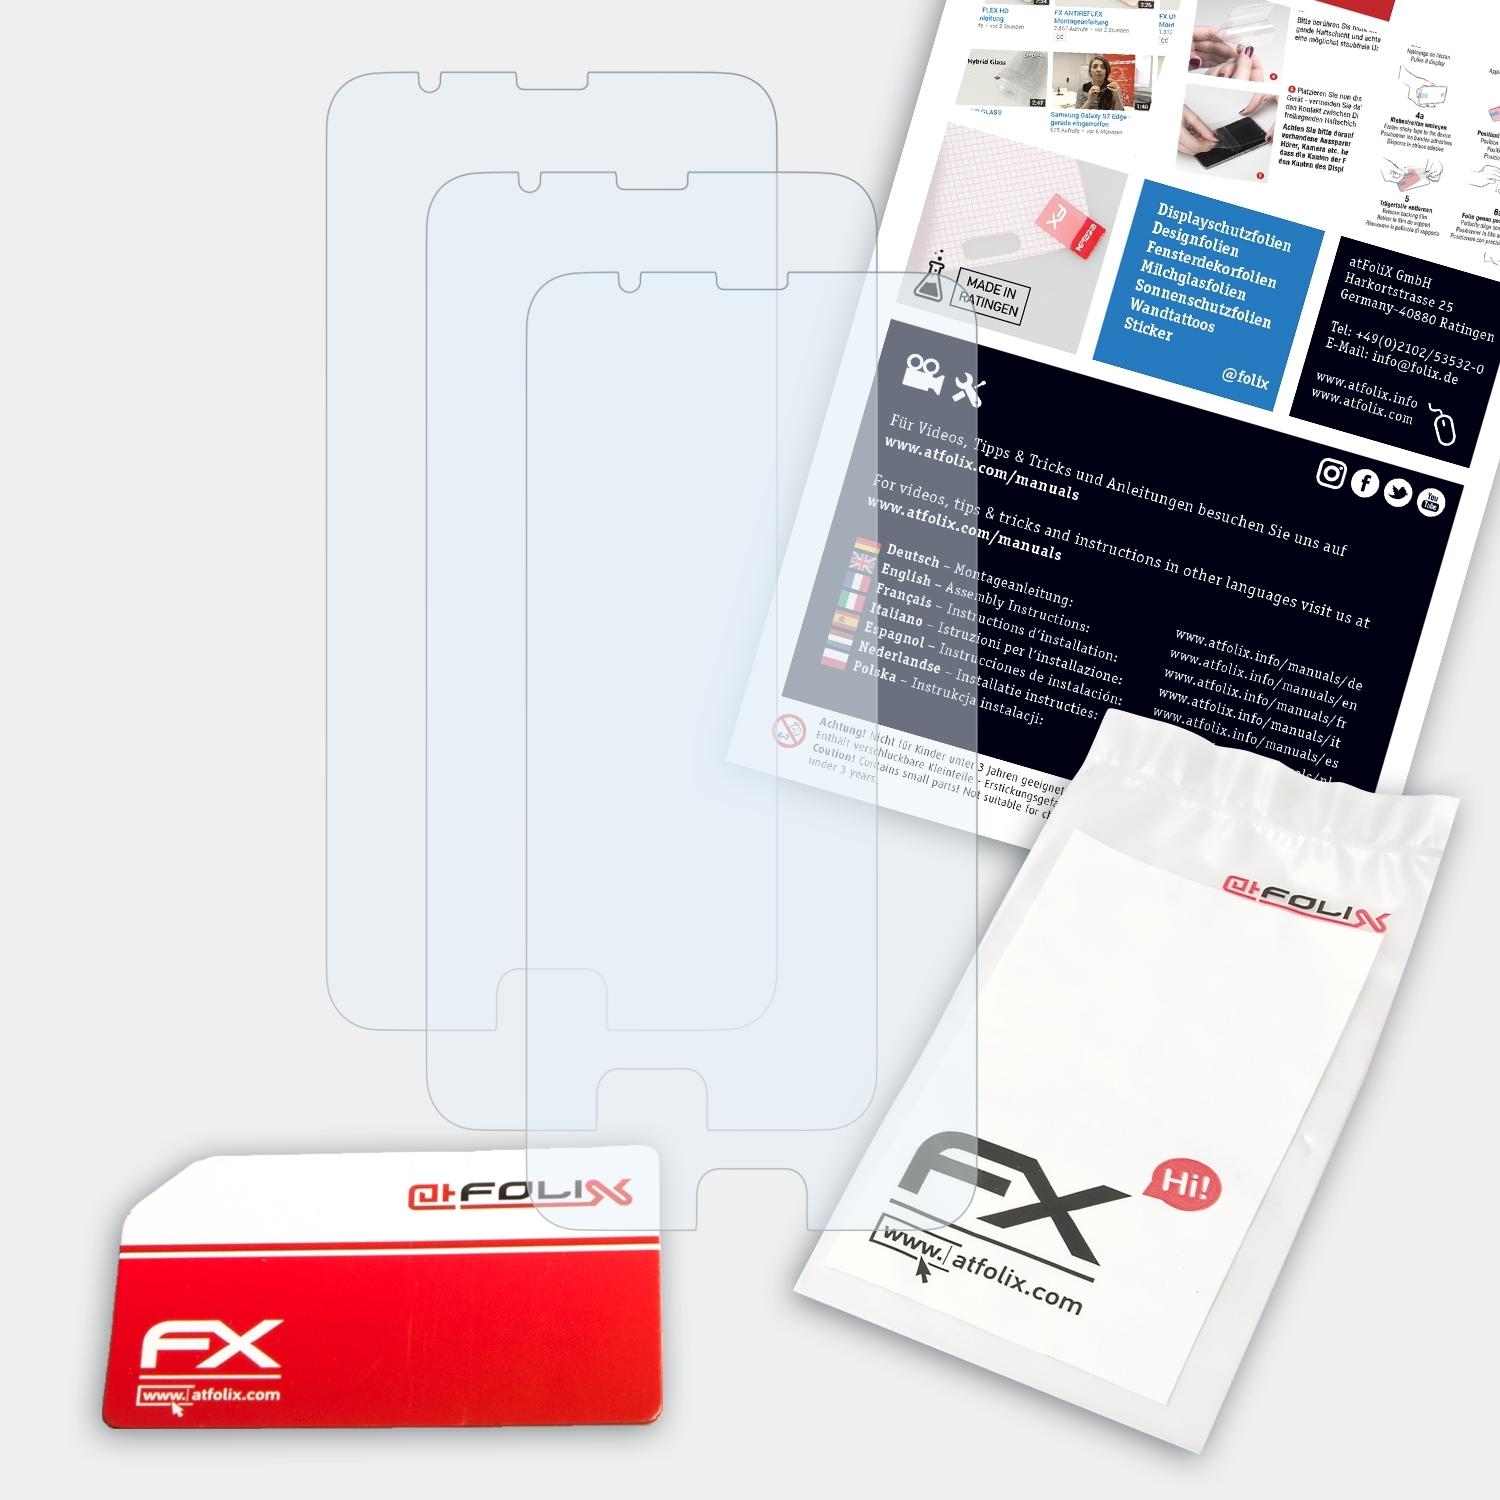 ATFOLIX 3x FX-Clear Asus Max ZenFone 4 Displayschutz(für (ZC550TL))